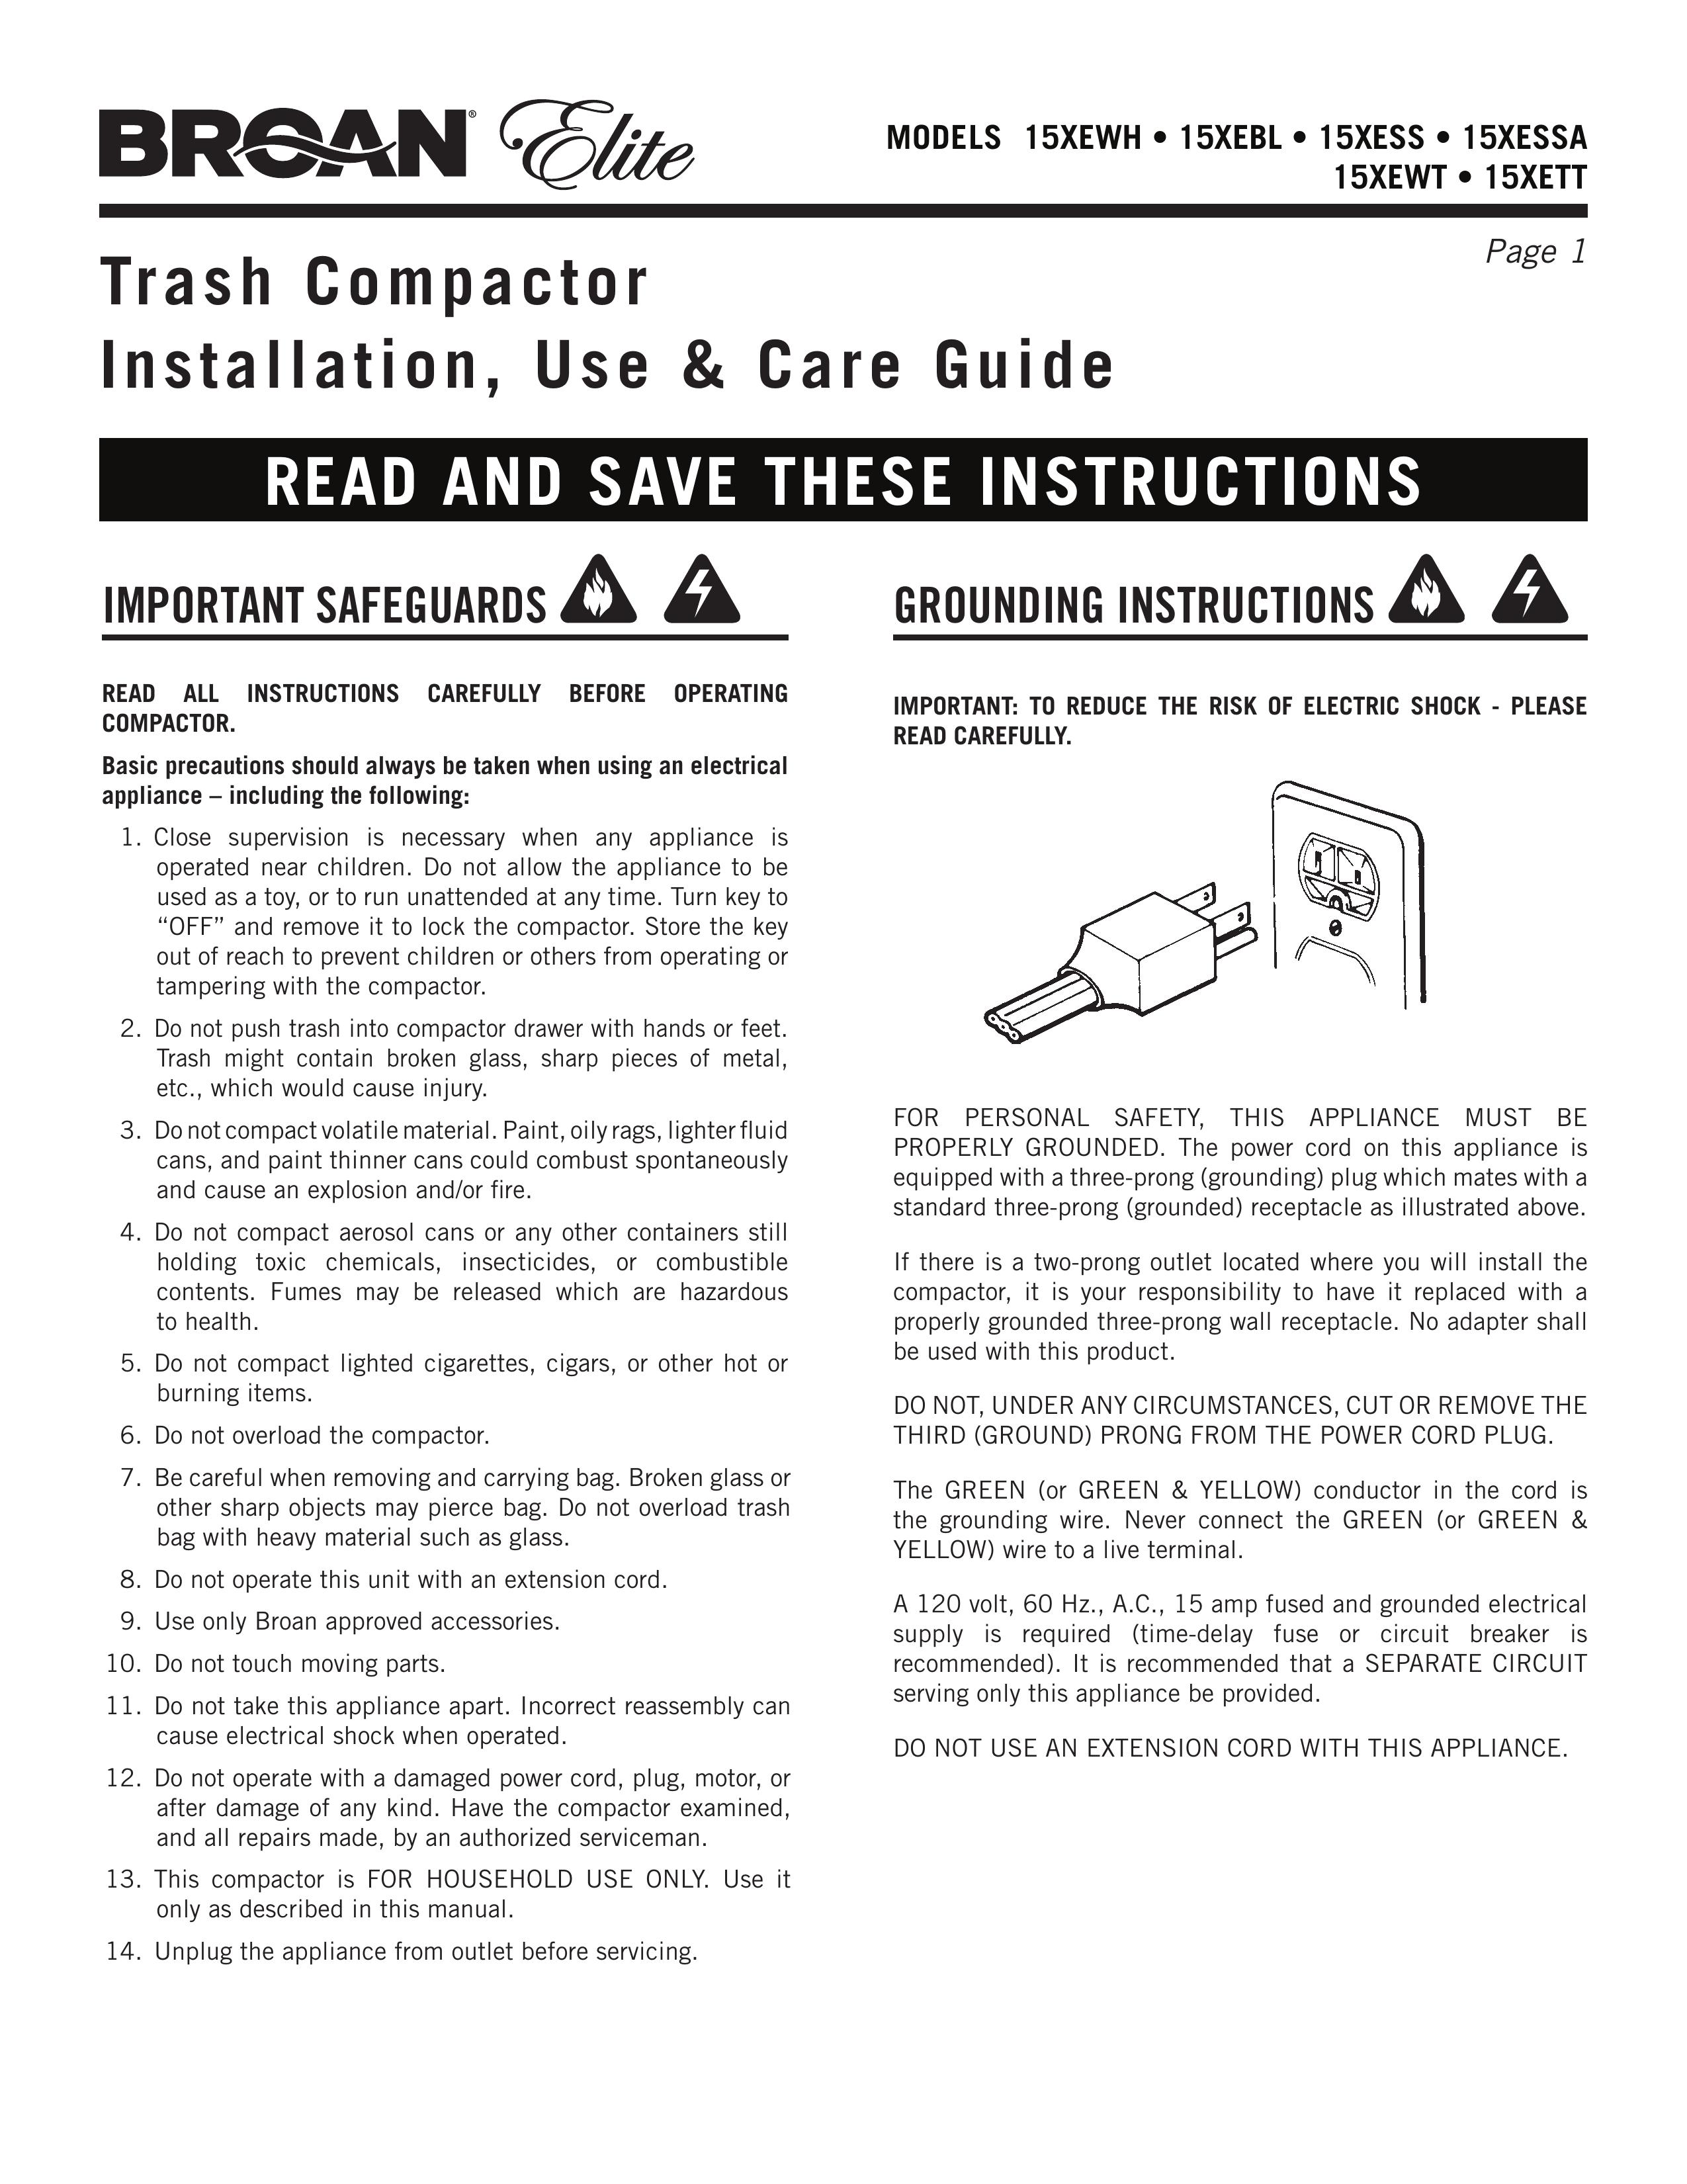 Broan 15XeTT Trash Compactor User Manual